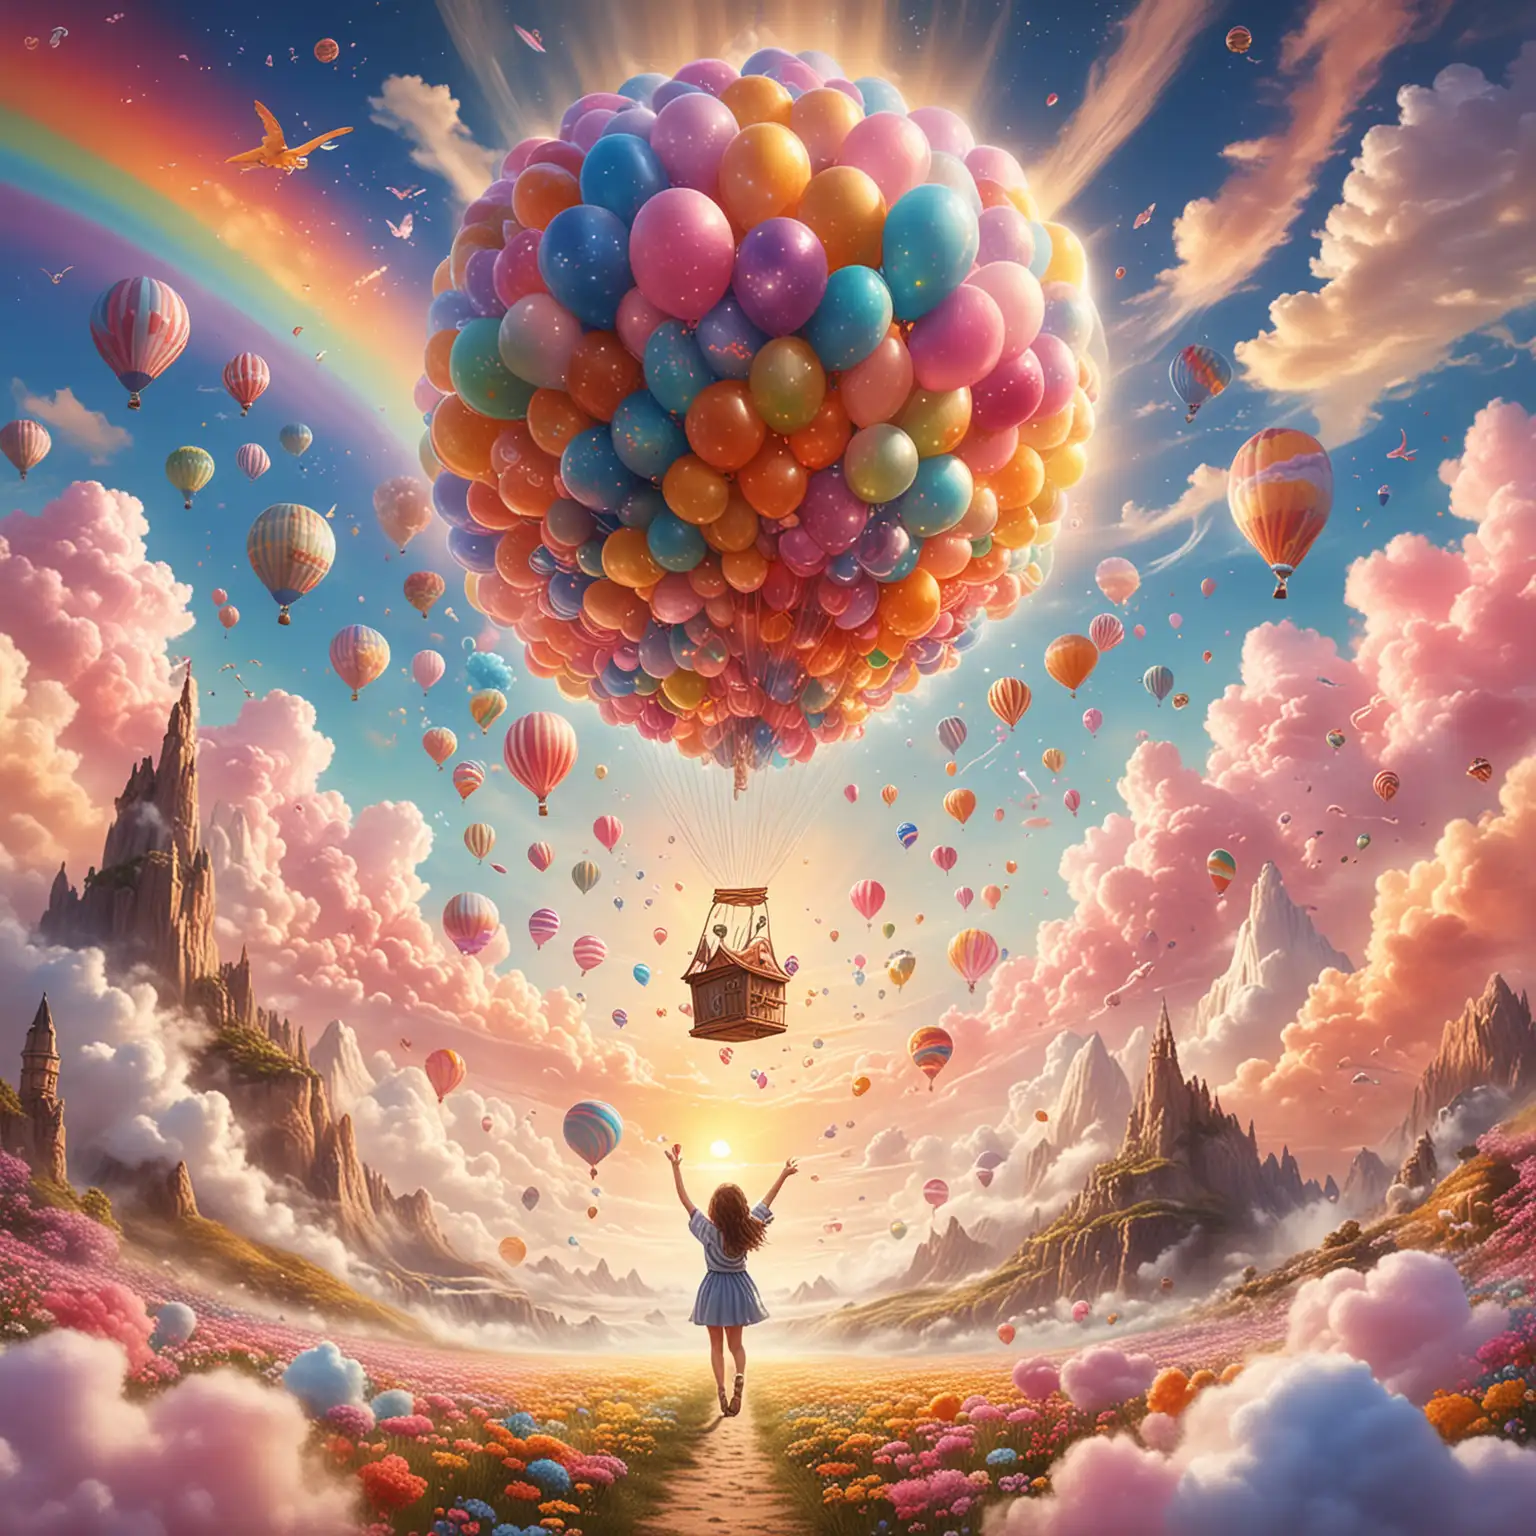 Enchanting-Dream-World-with-Fairies-Rainbows-and-Balloons